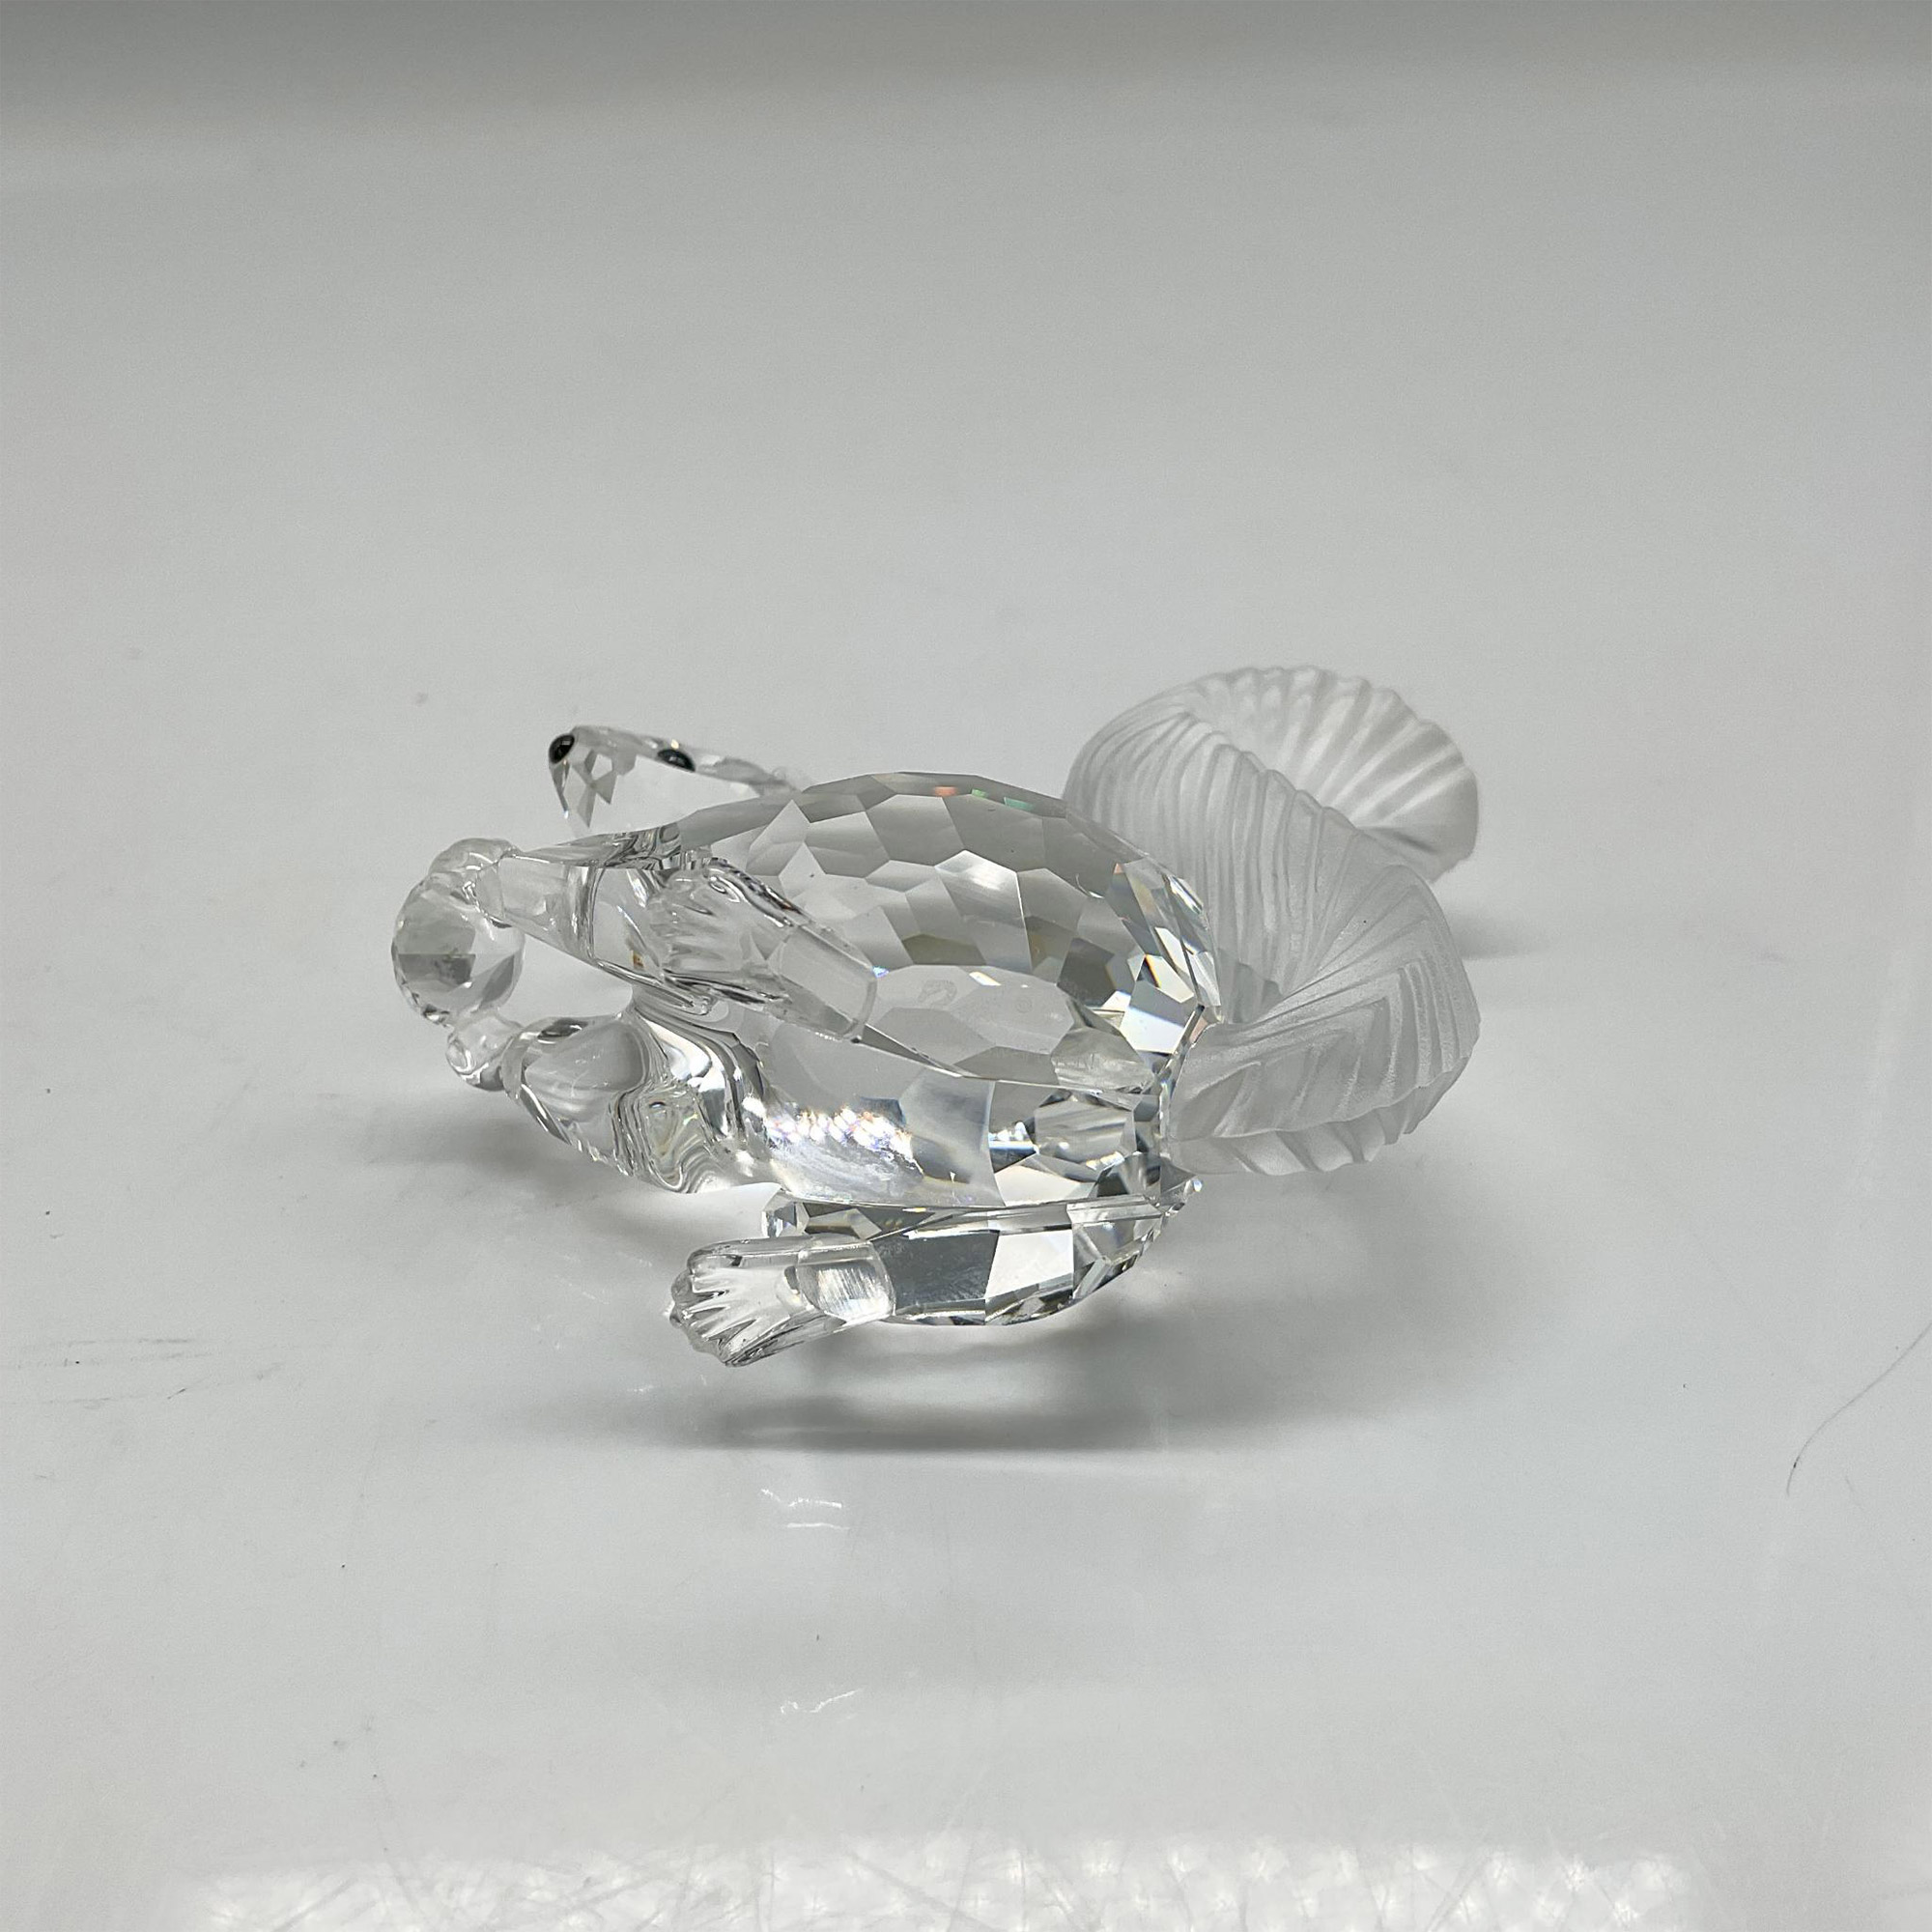 Swarovski Crystal Society Figurine, 10th AE The Squirrel - Image 3 of 4